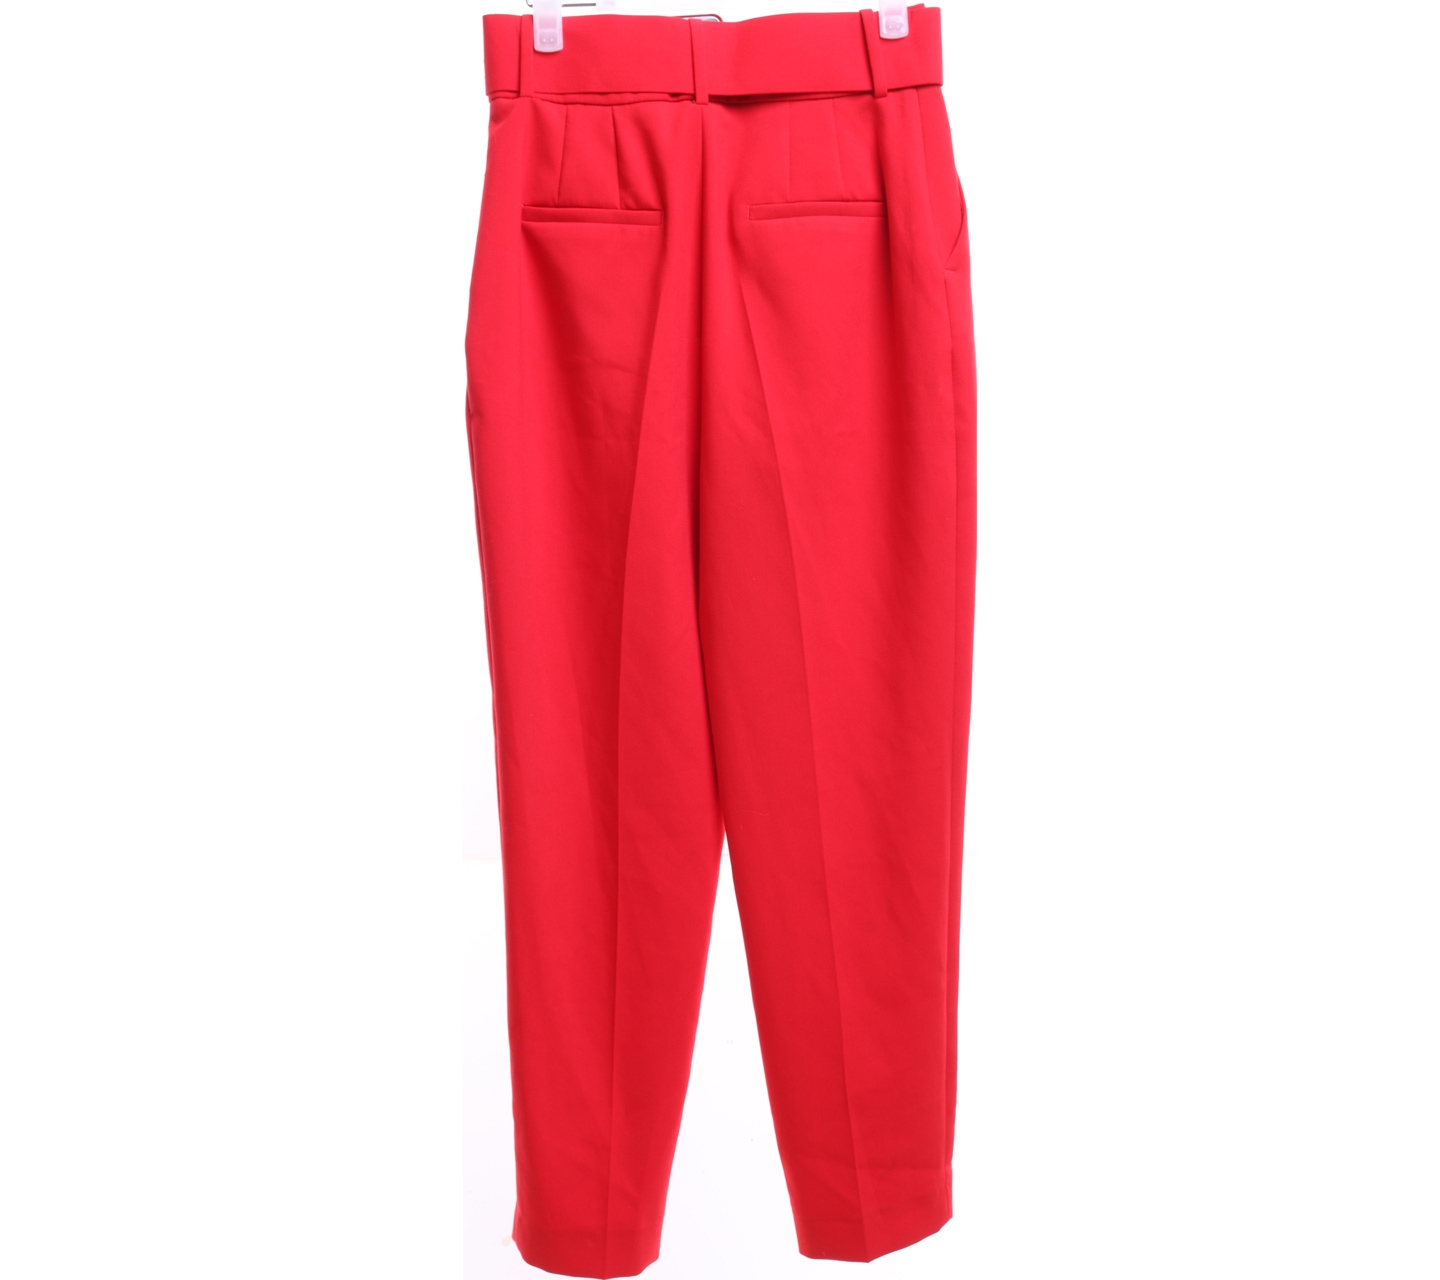 Zara red long pants